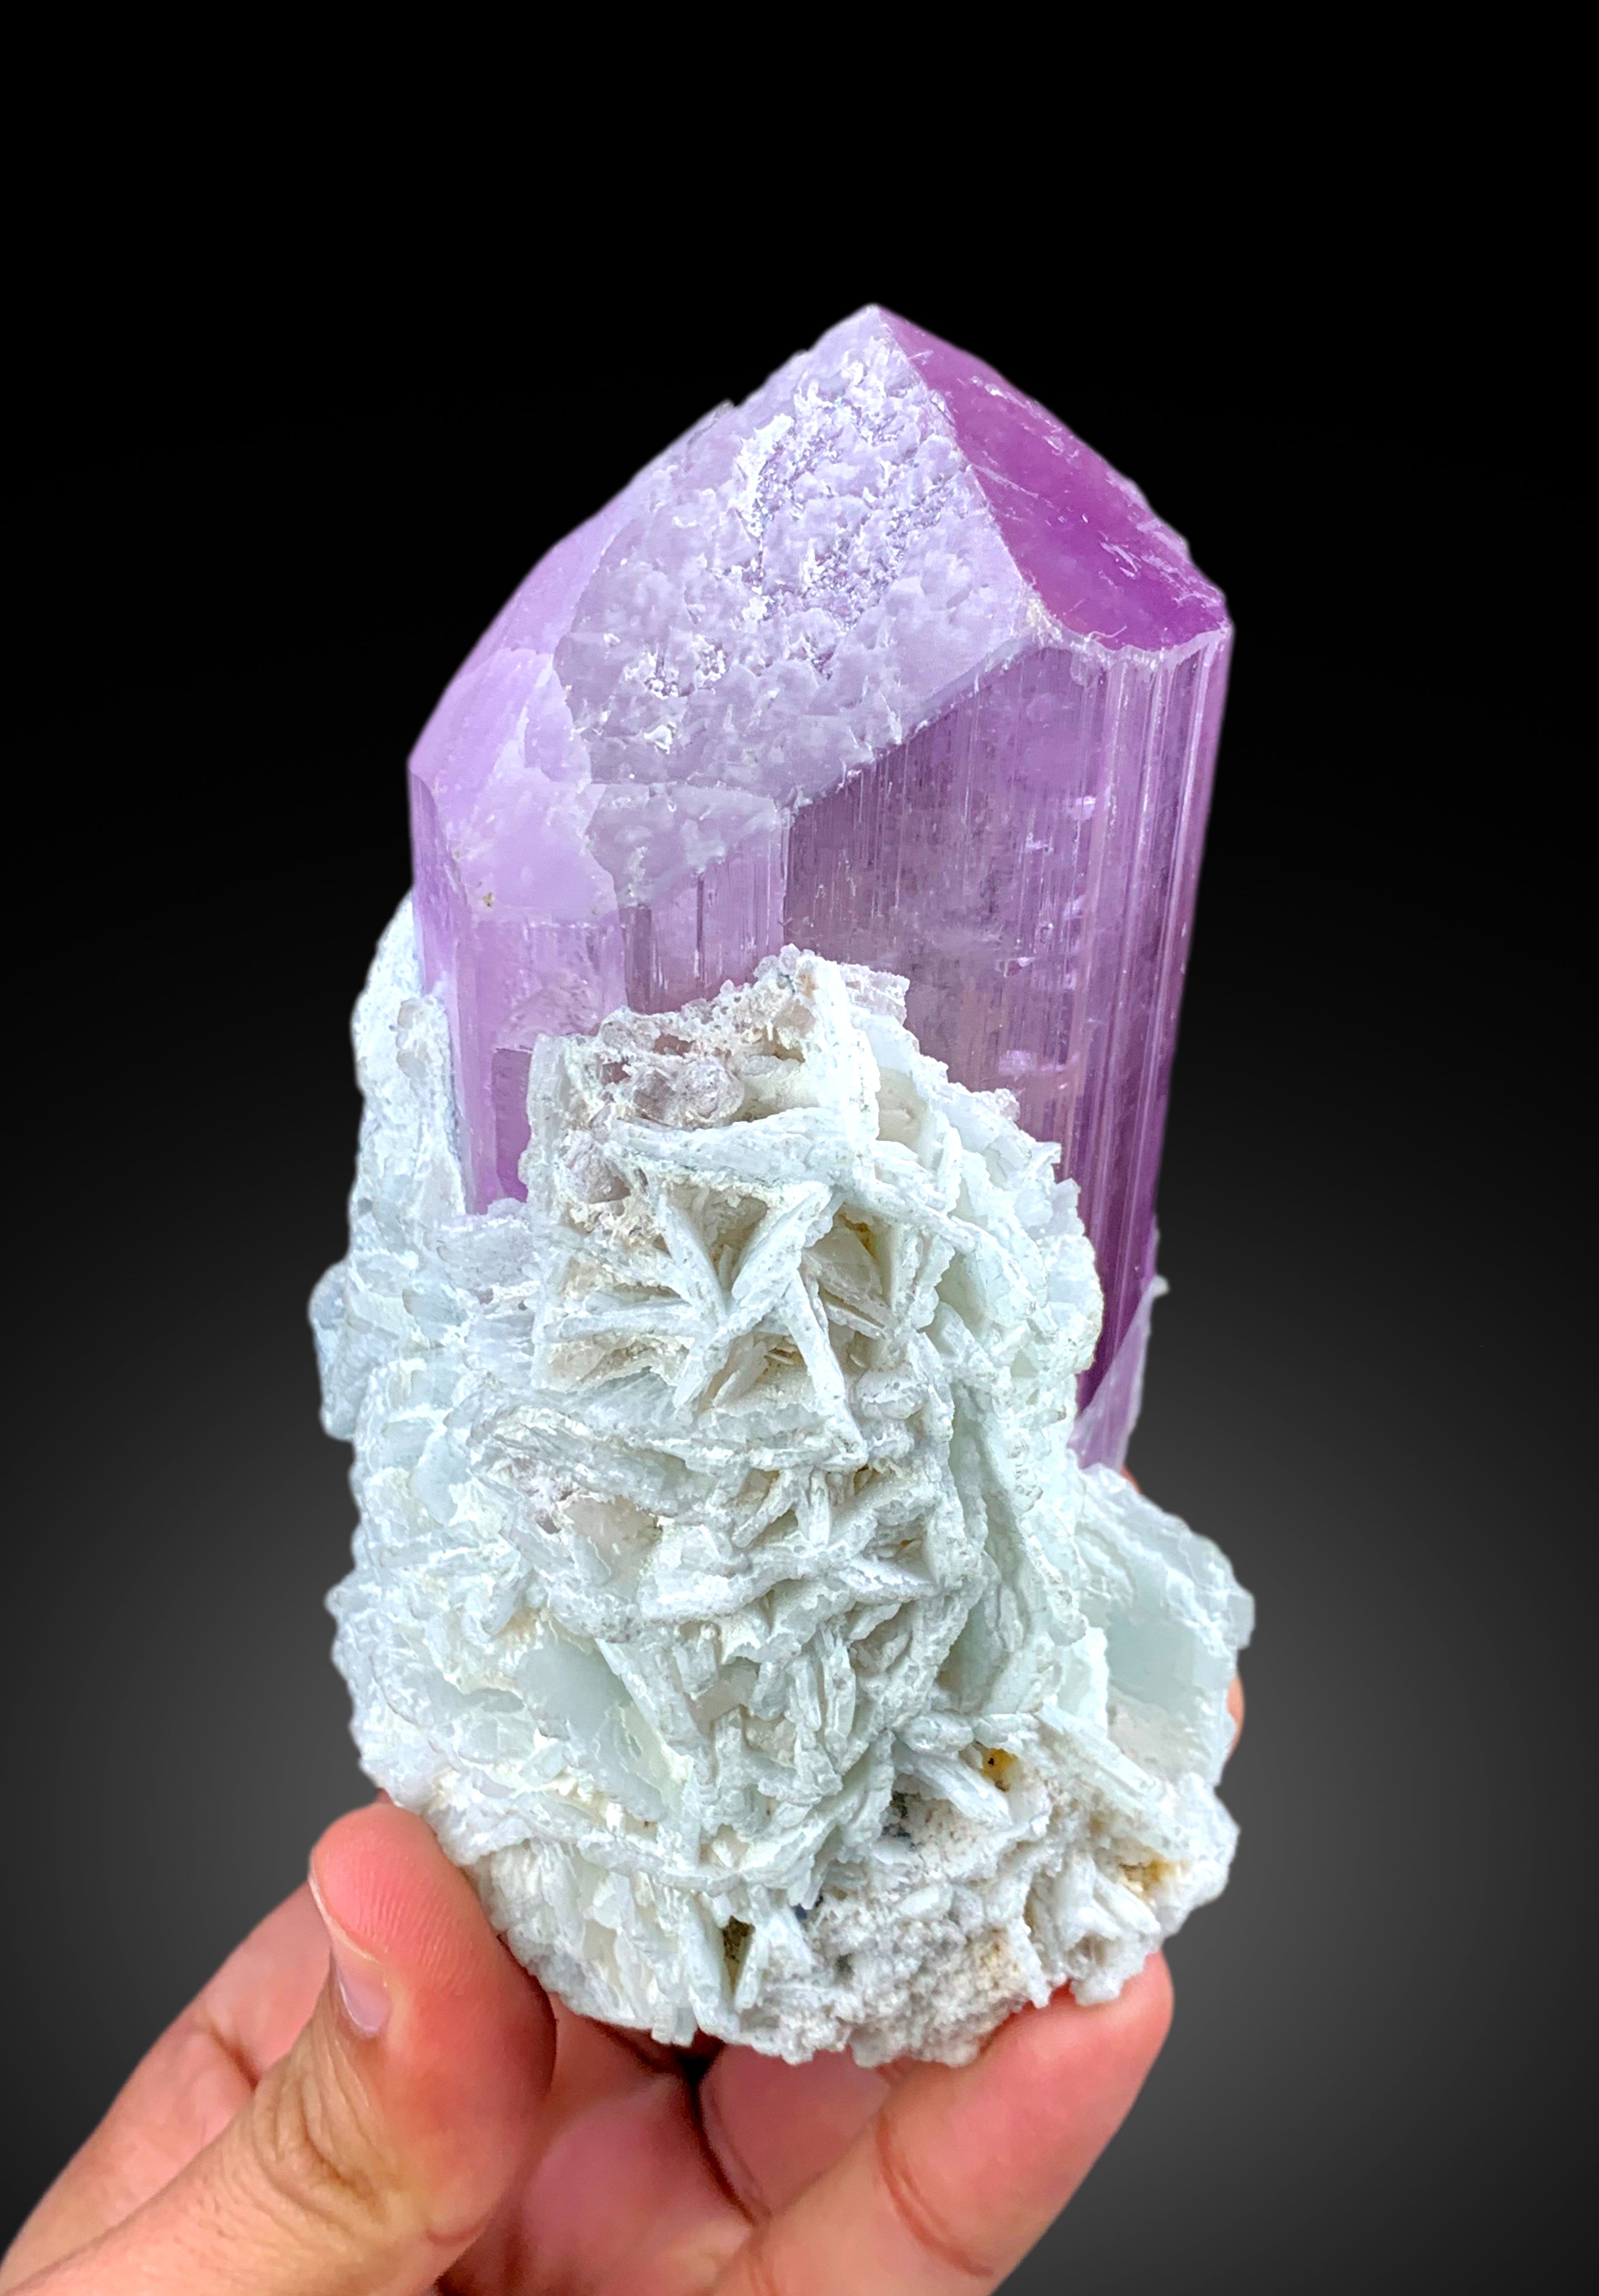 Exquisite Natural Pink Kunzite Crystal with Cleavelandite, Kunzite Specimen, Raw Mineral, Kunzite from Afghanistan - 694 gram